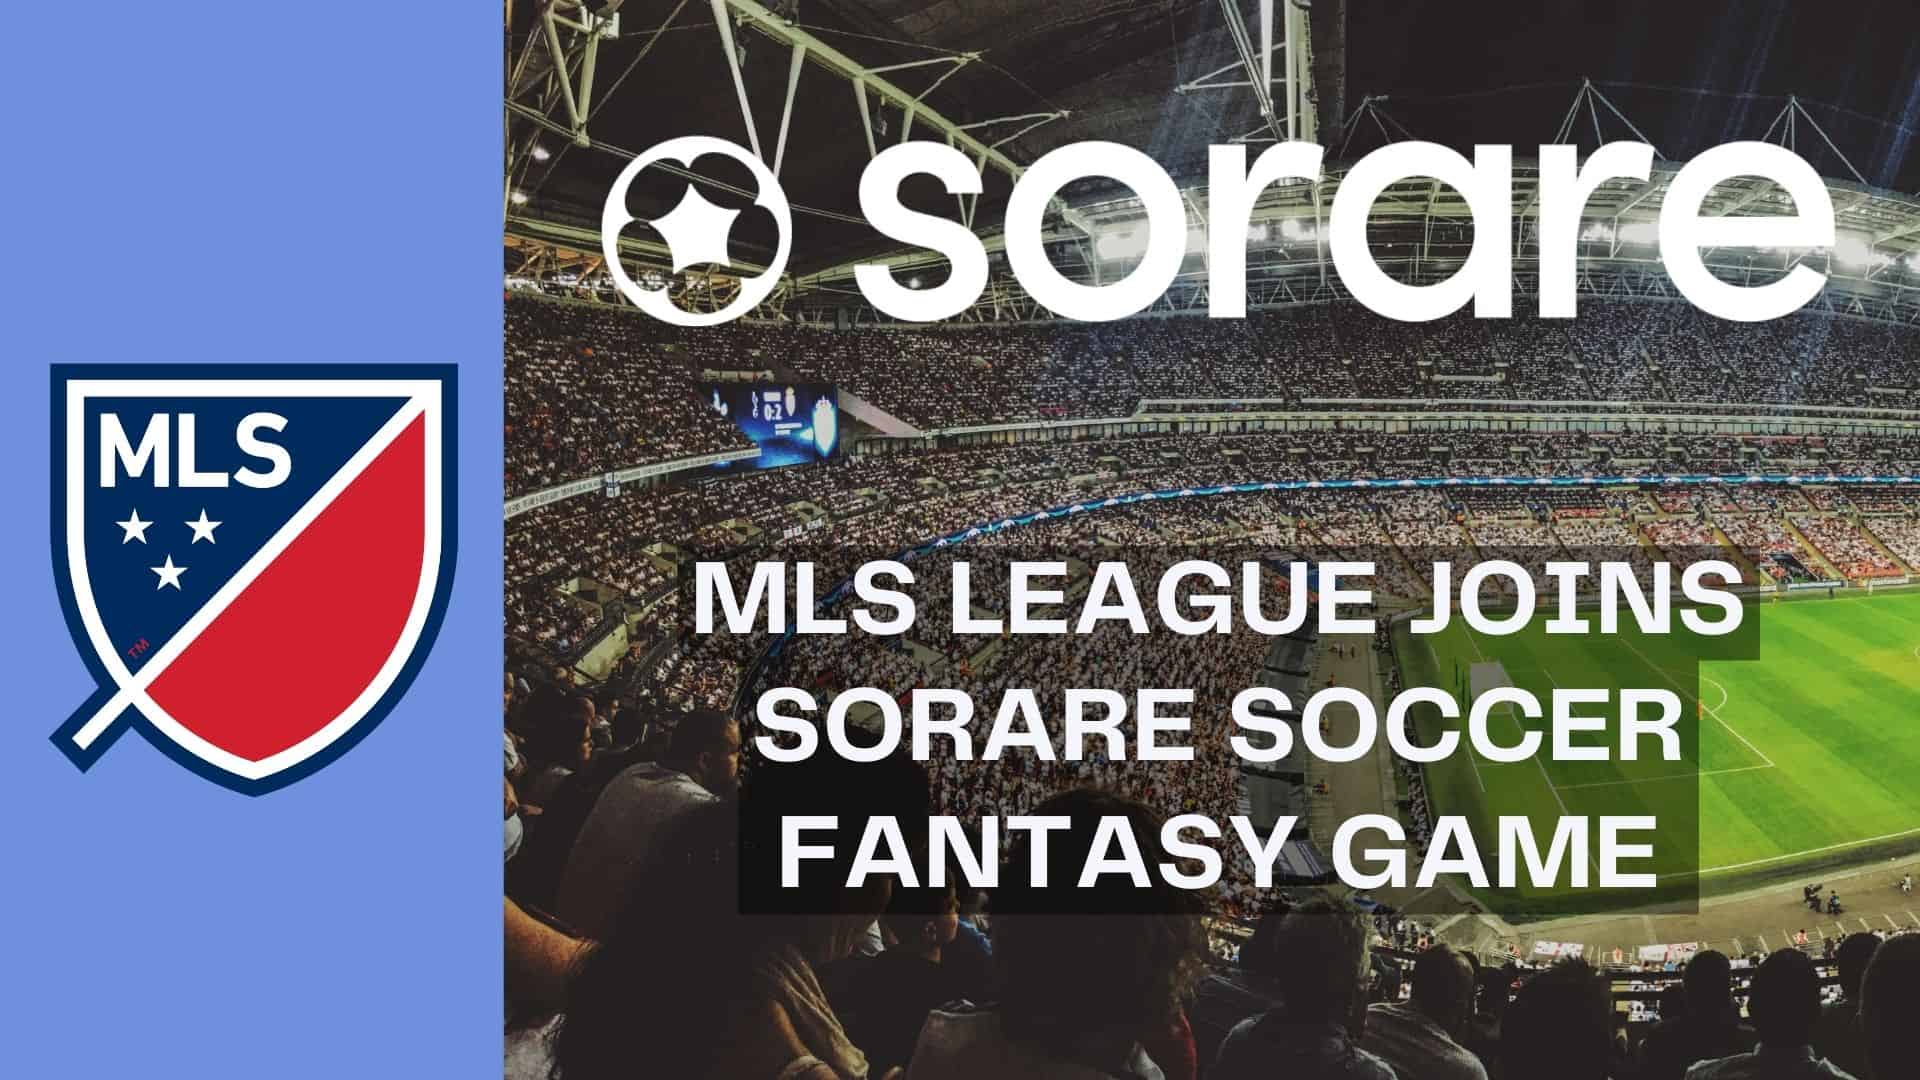 MLS League Joins Sorare Soccer Fantasy Game